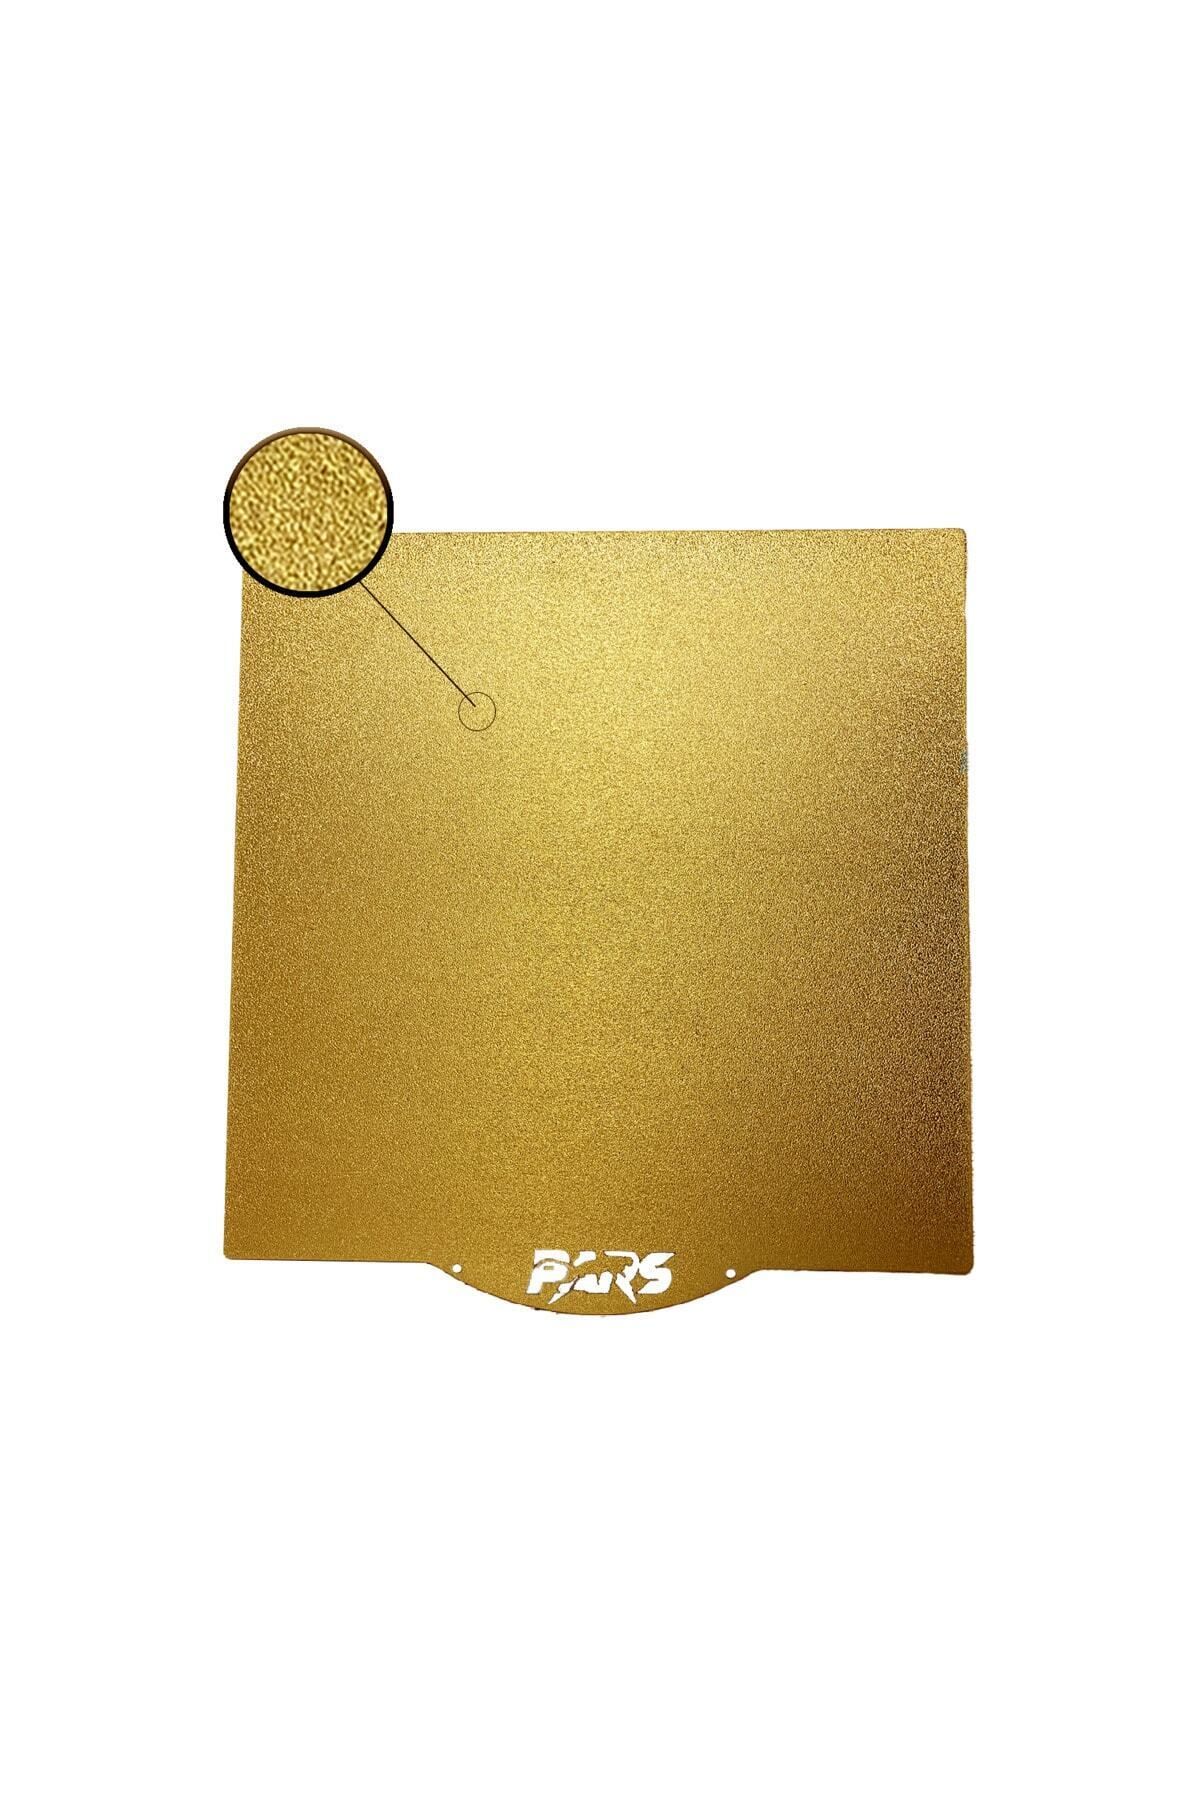 Pars 235x235 Mm Gold Pei Kaplı Özel Yay Çeliği Tabla Magnetsiz